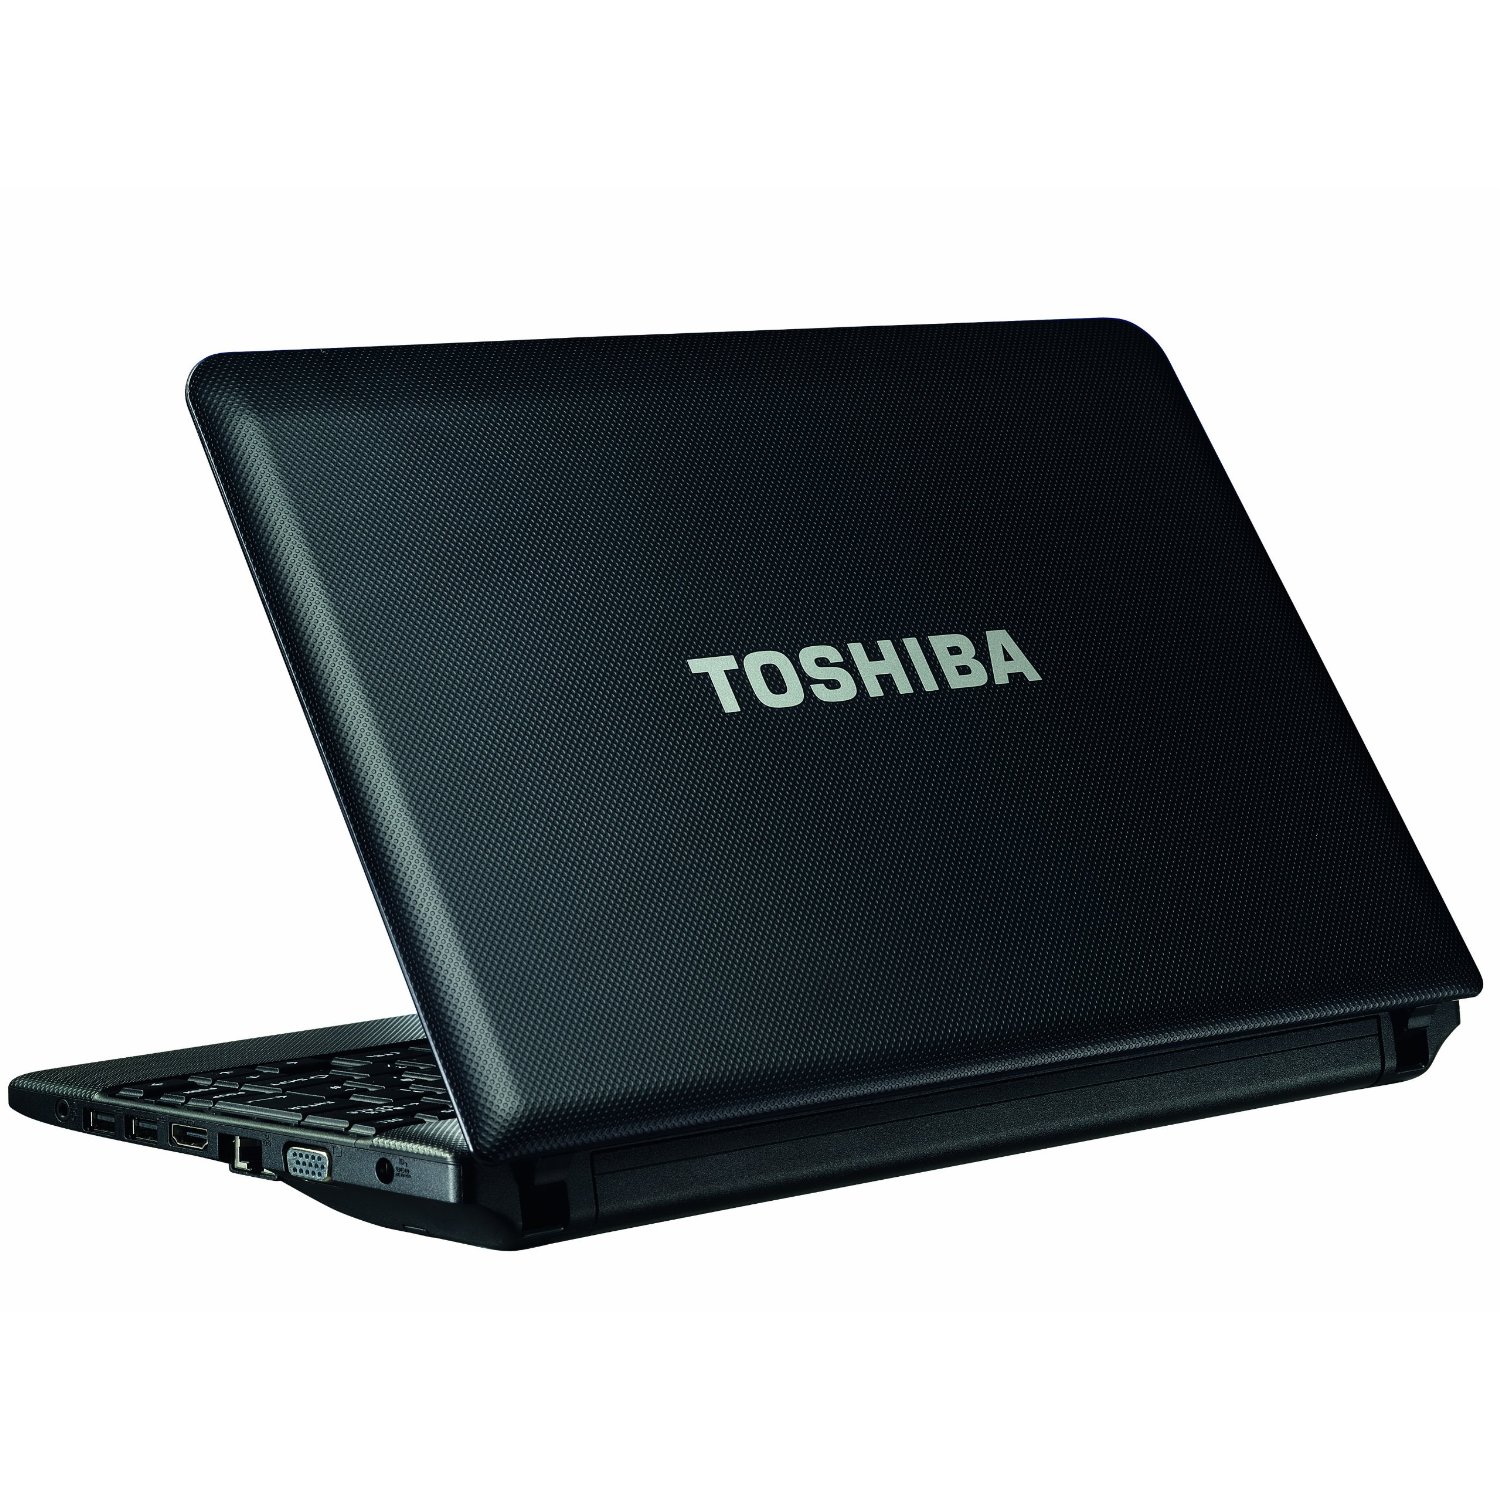 Toshiba NB510 serie - Notebookcheck.org